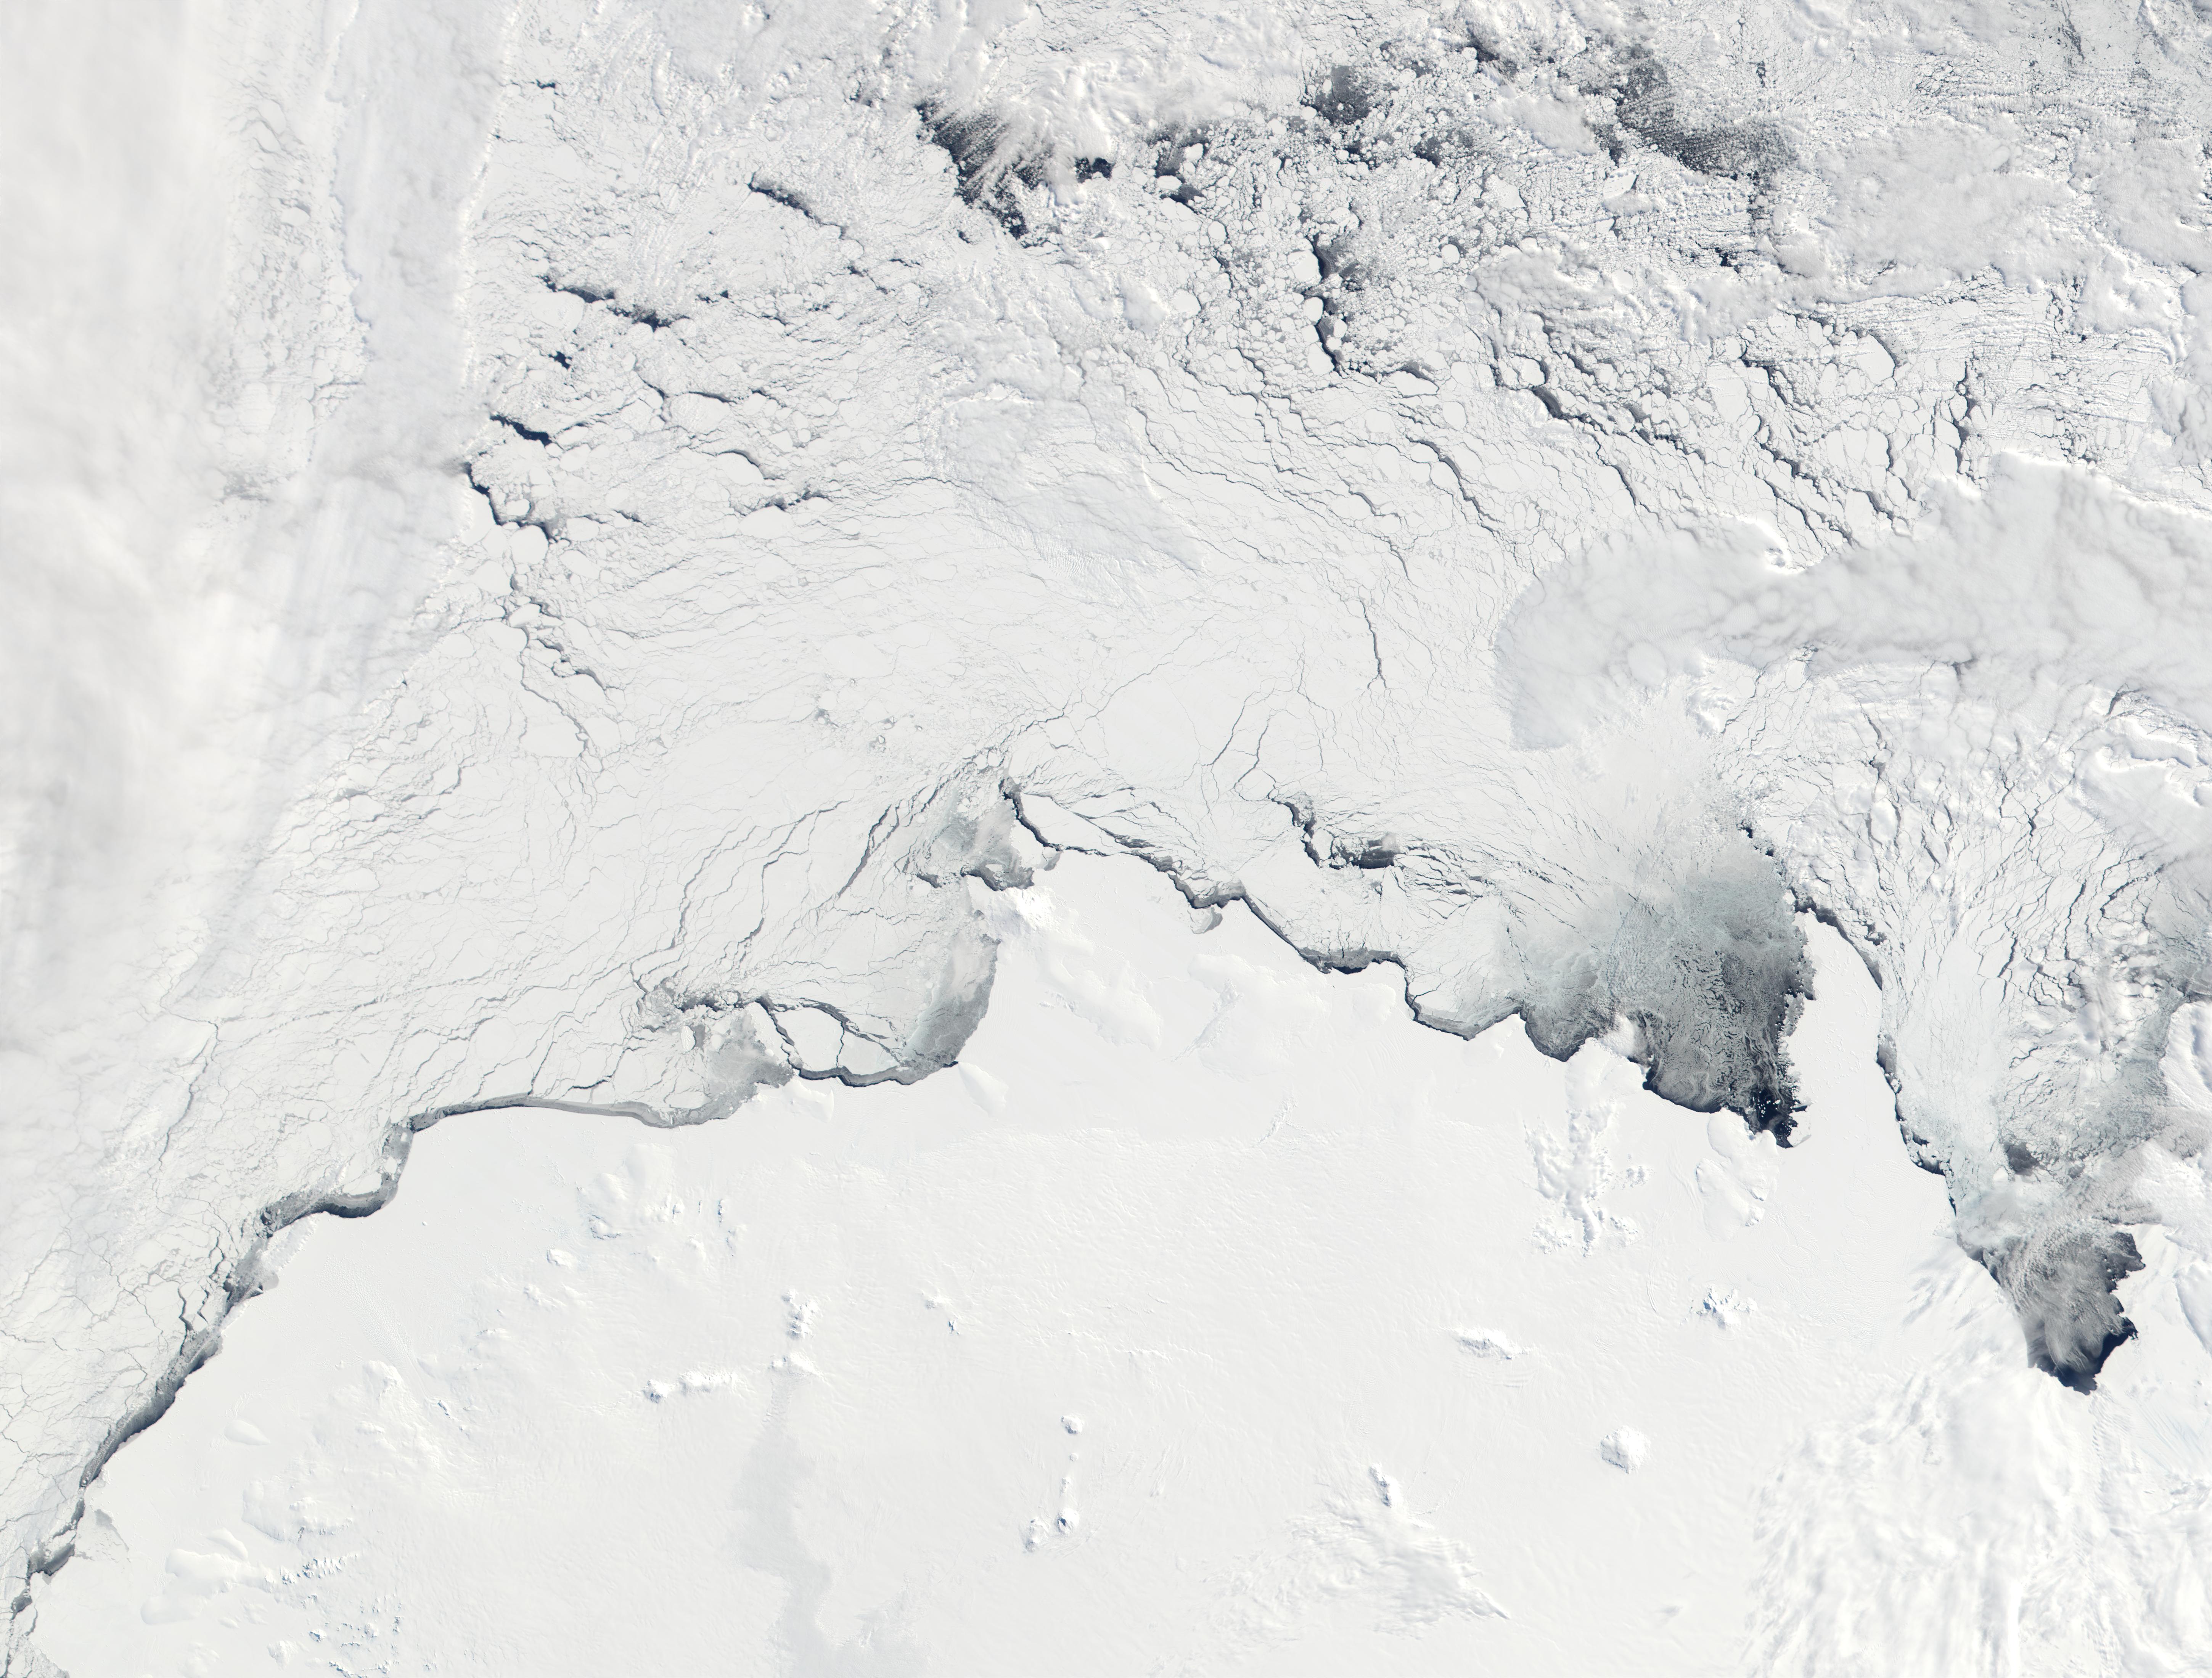 Ruppert Coast, Hobbs Coast, Bakutis Coast, and Walgreen Coast, Antarctica - related image preview